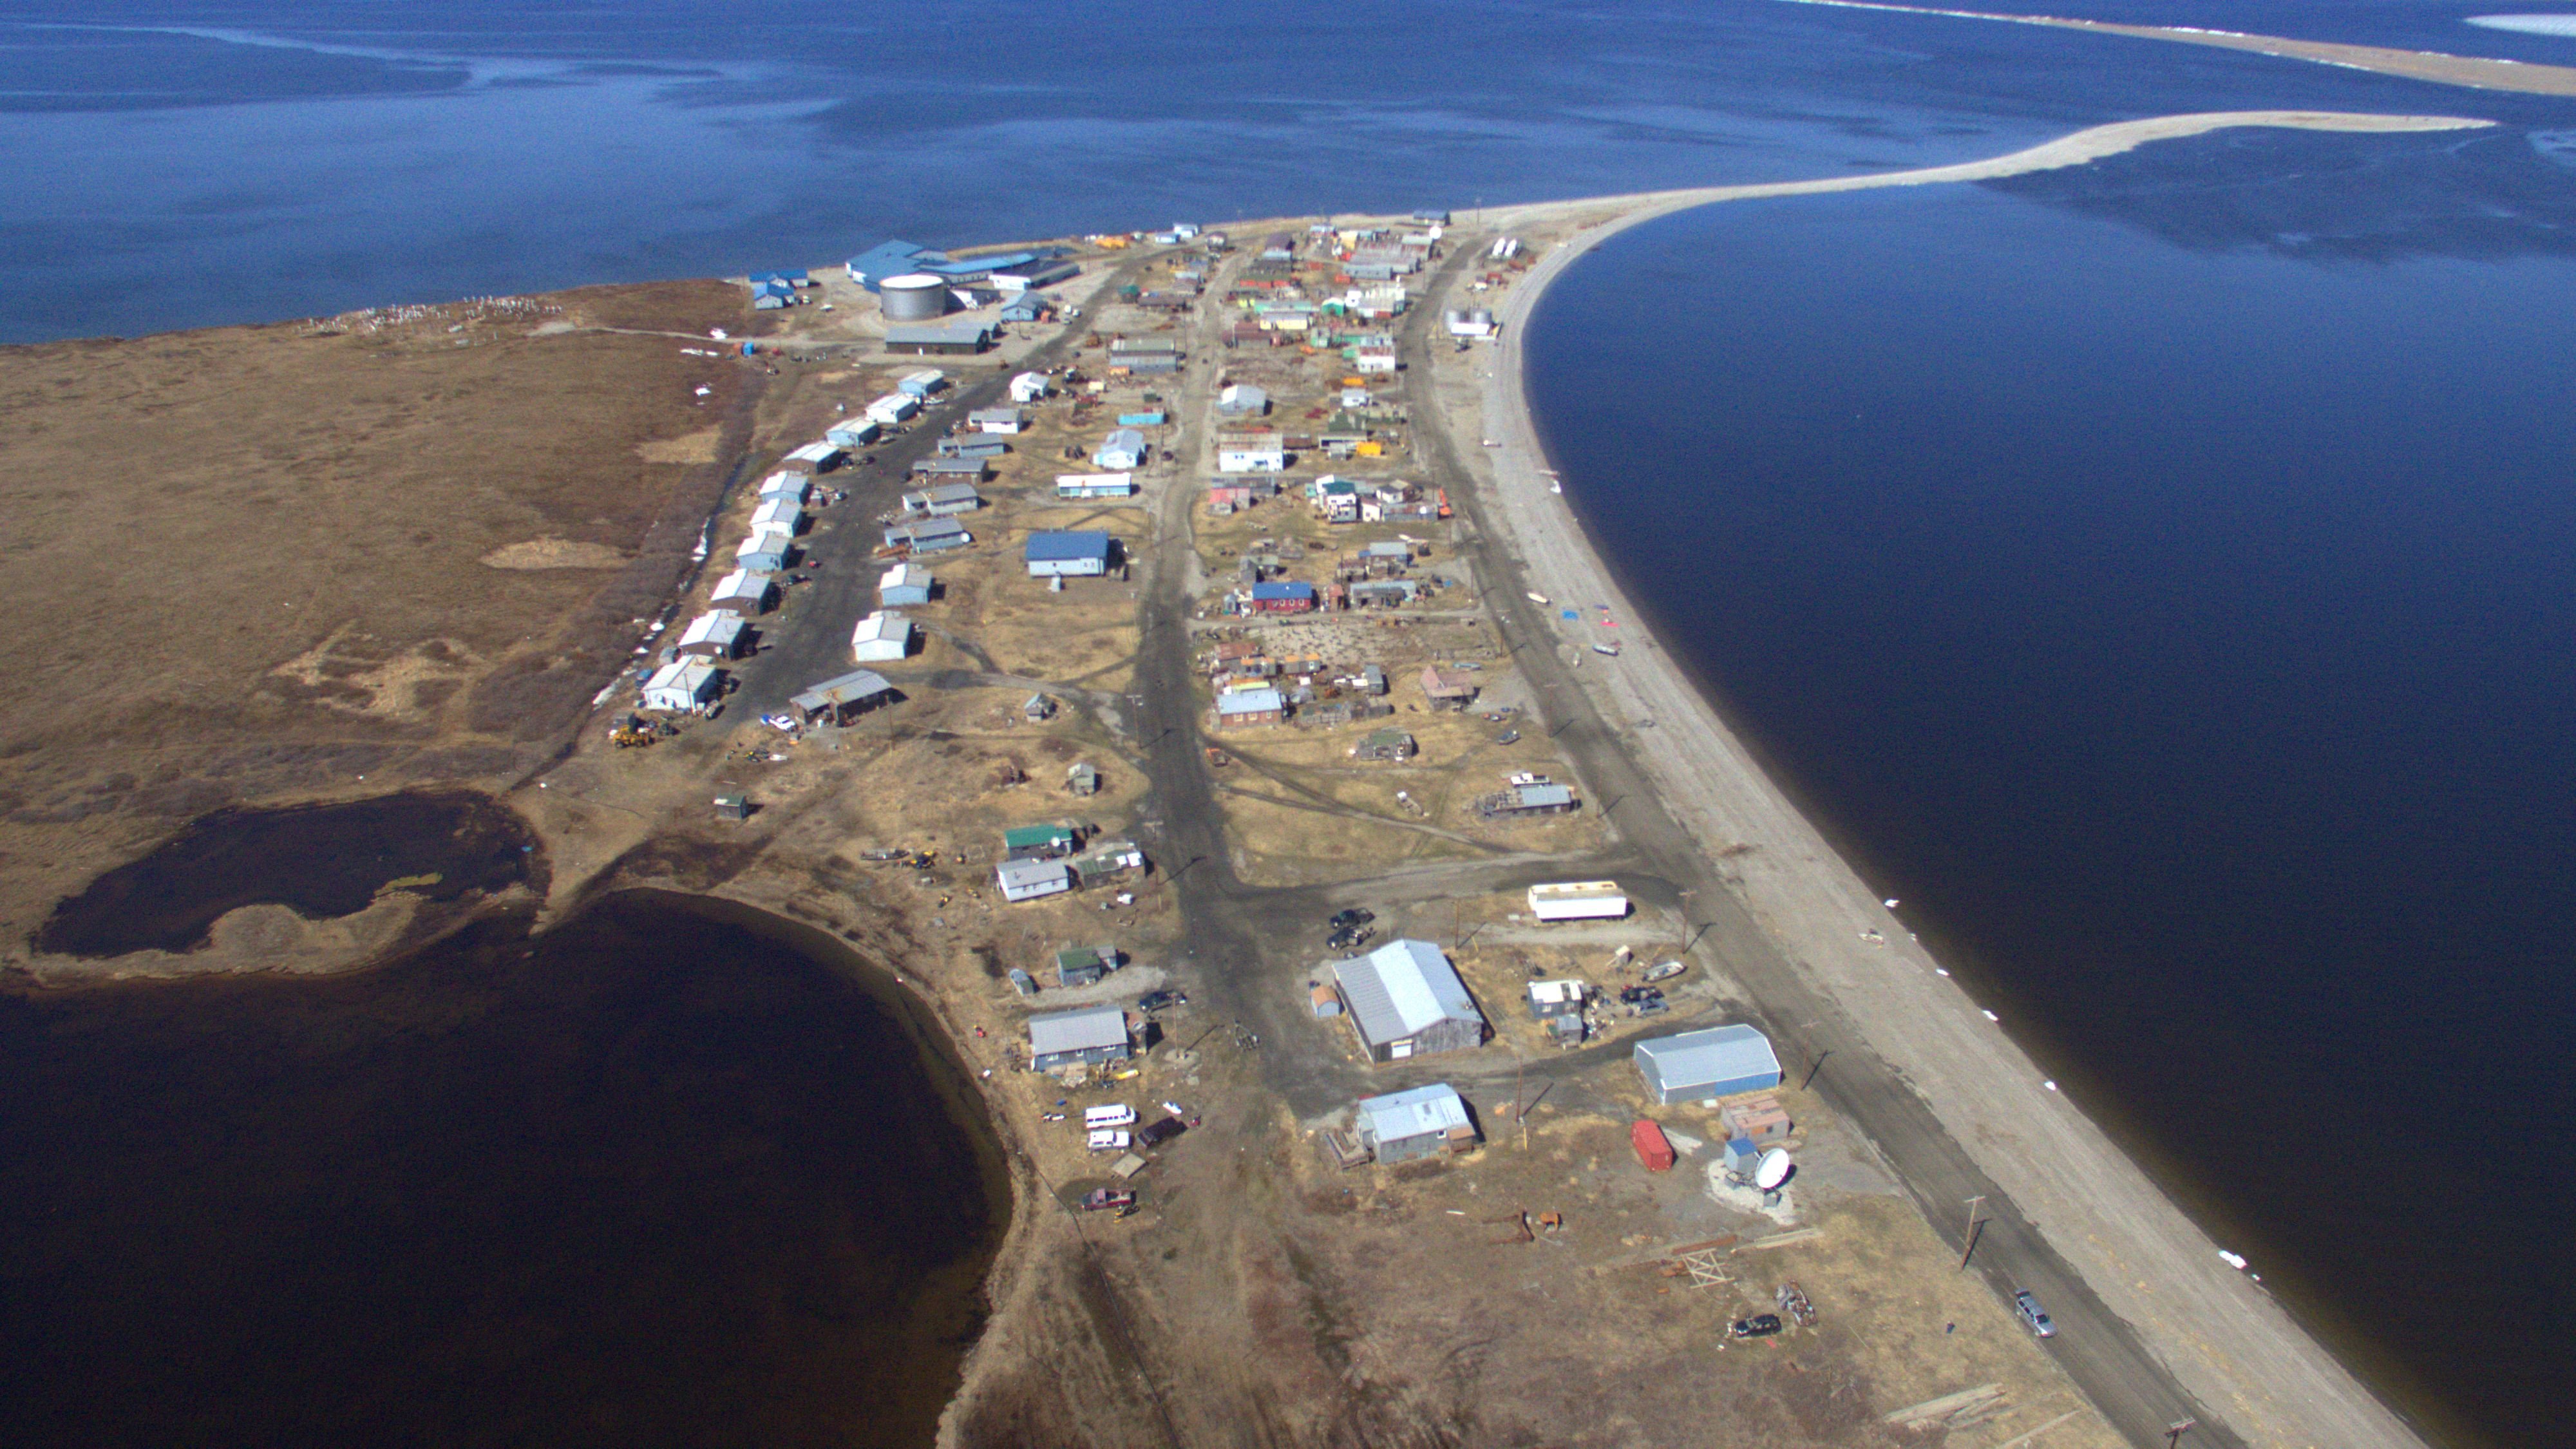 Teller Alaska - threatened by climate change